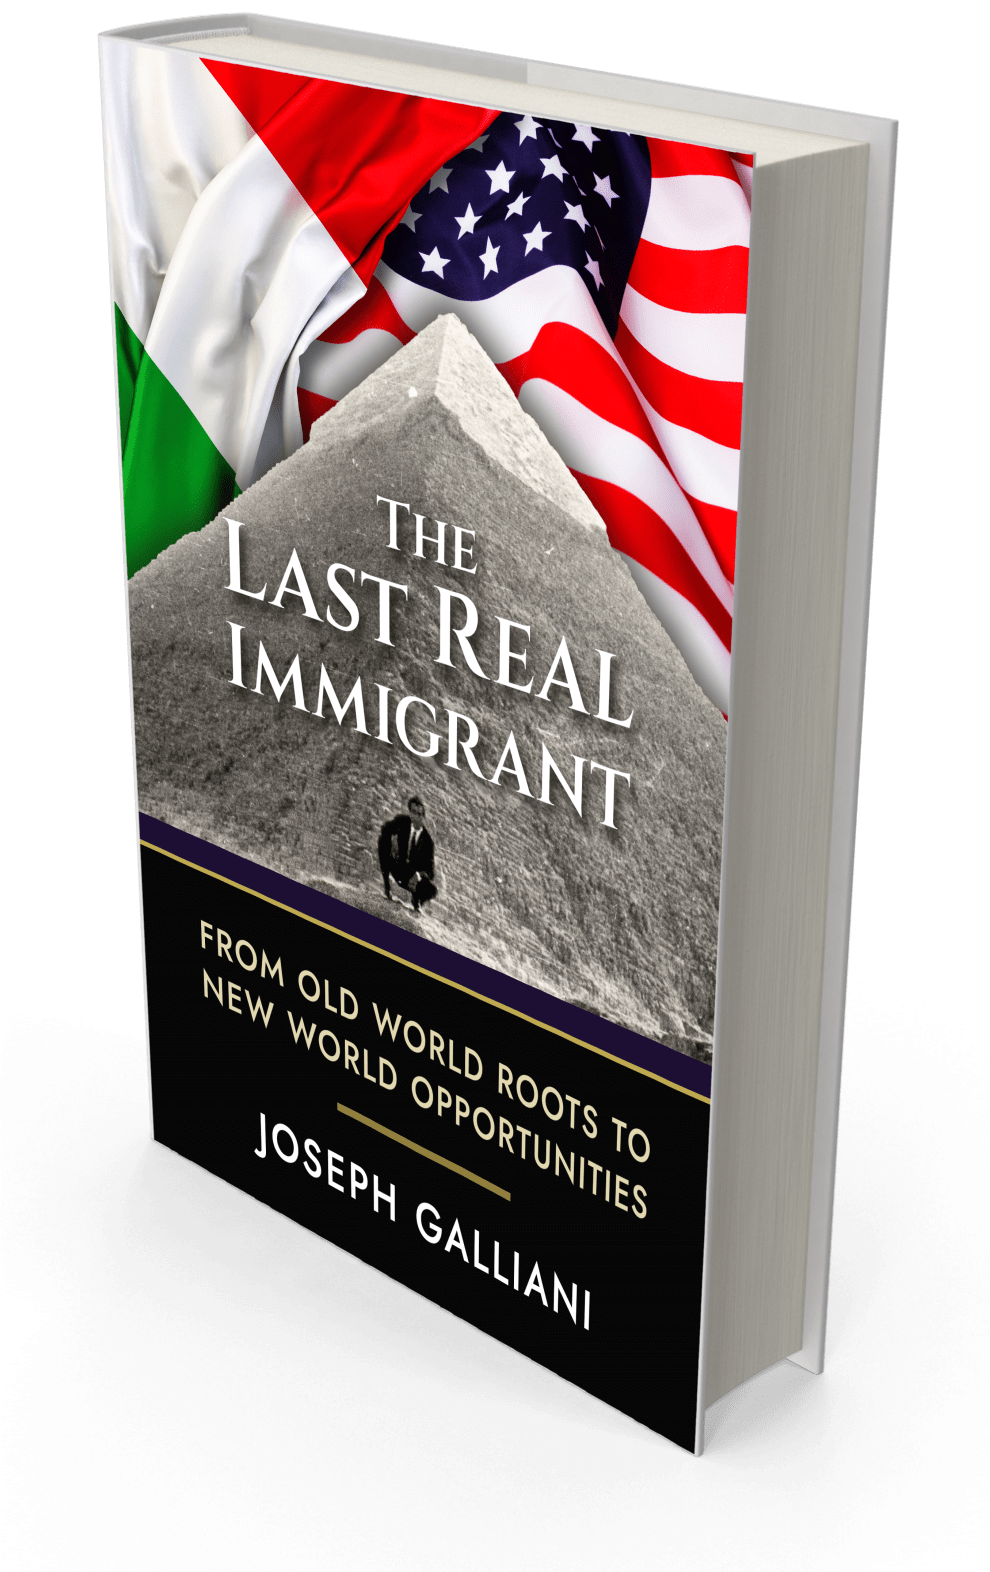 The Last Real Immigrant Book by Joseph Galliani